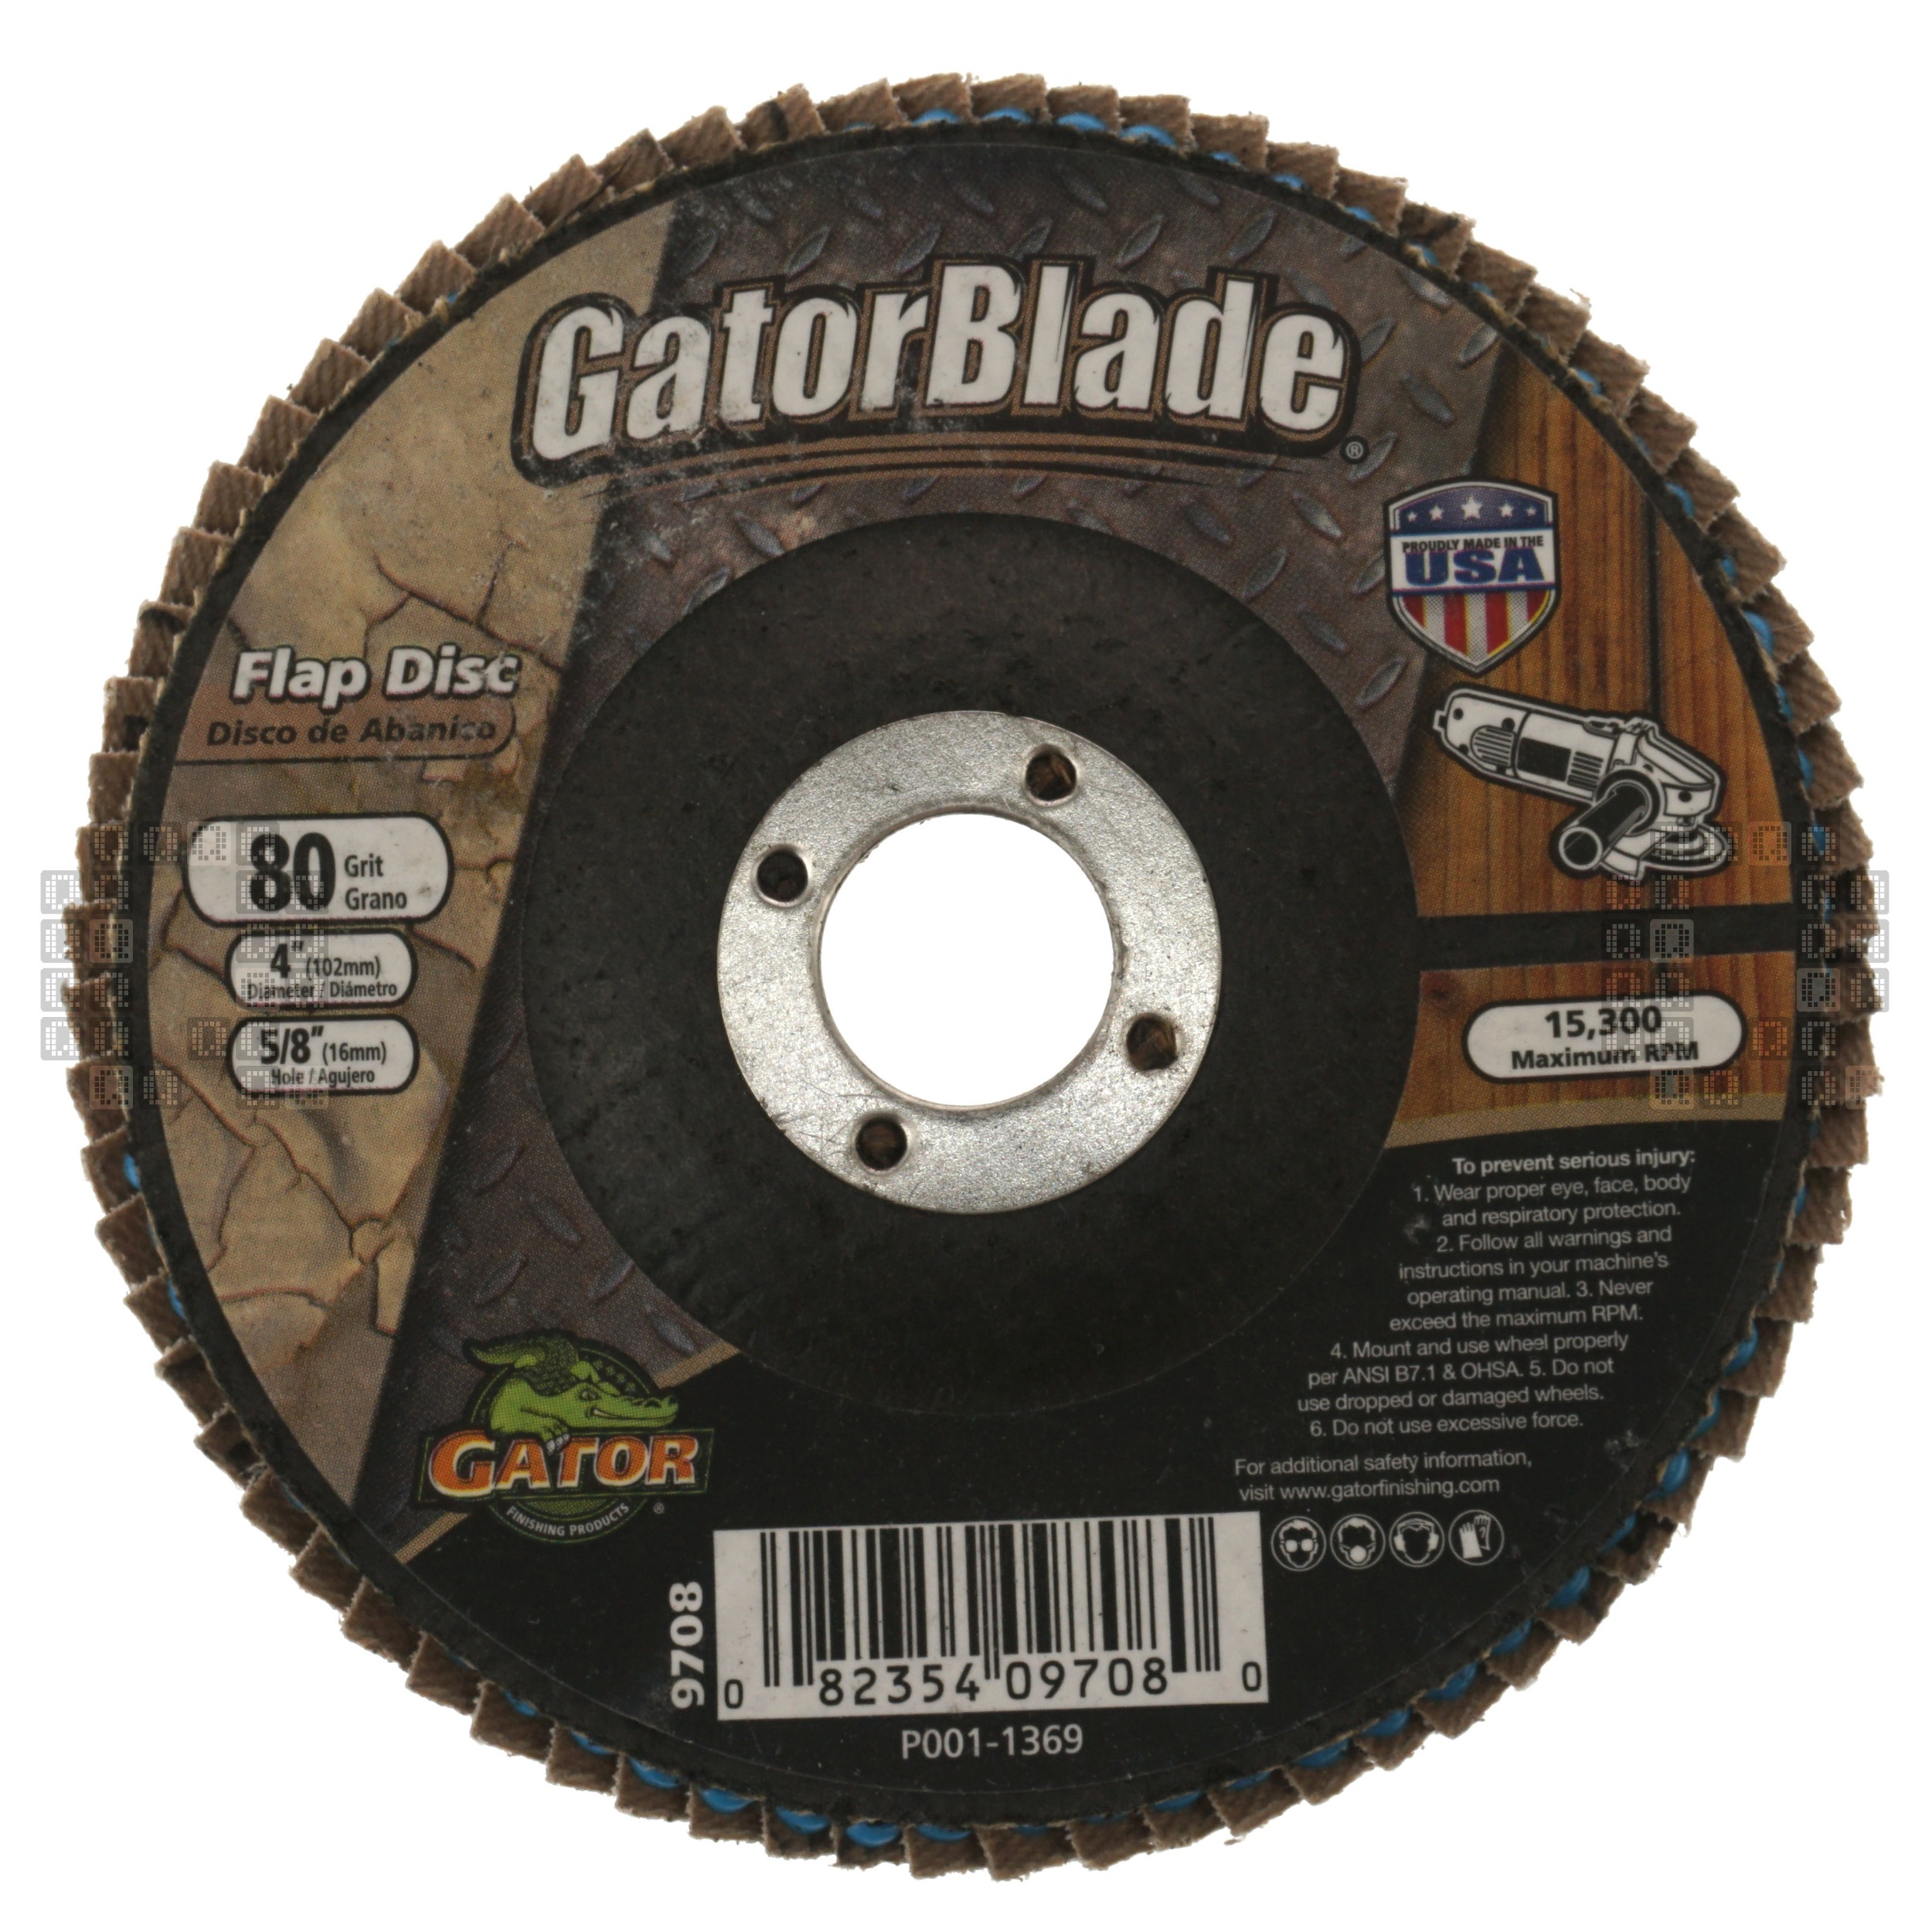 Gator 9708 4" Zirconium Oxide Abrasive Flap Disc, 5/8" Arbor, 80 Grit